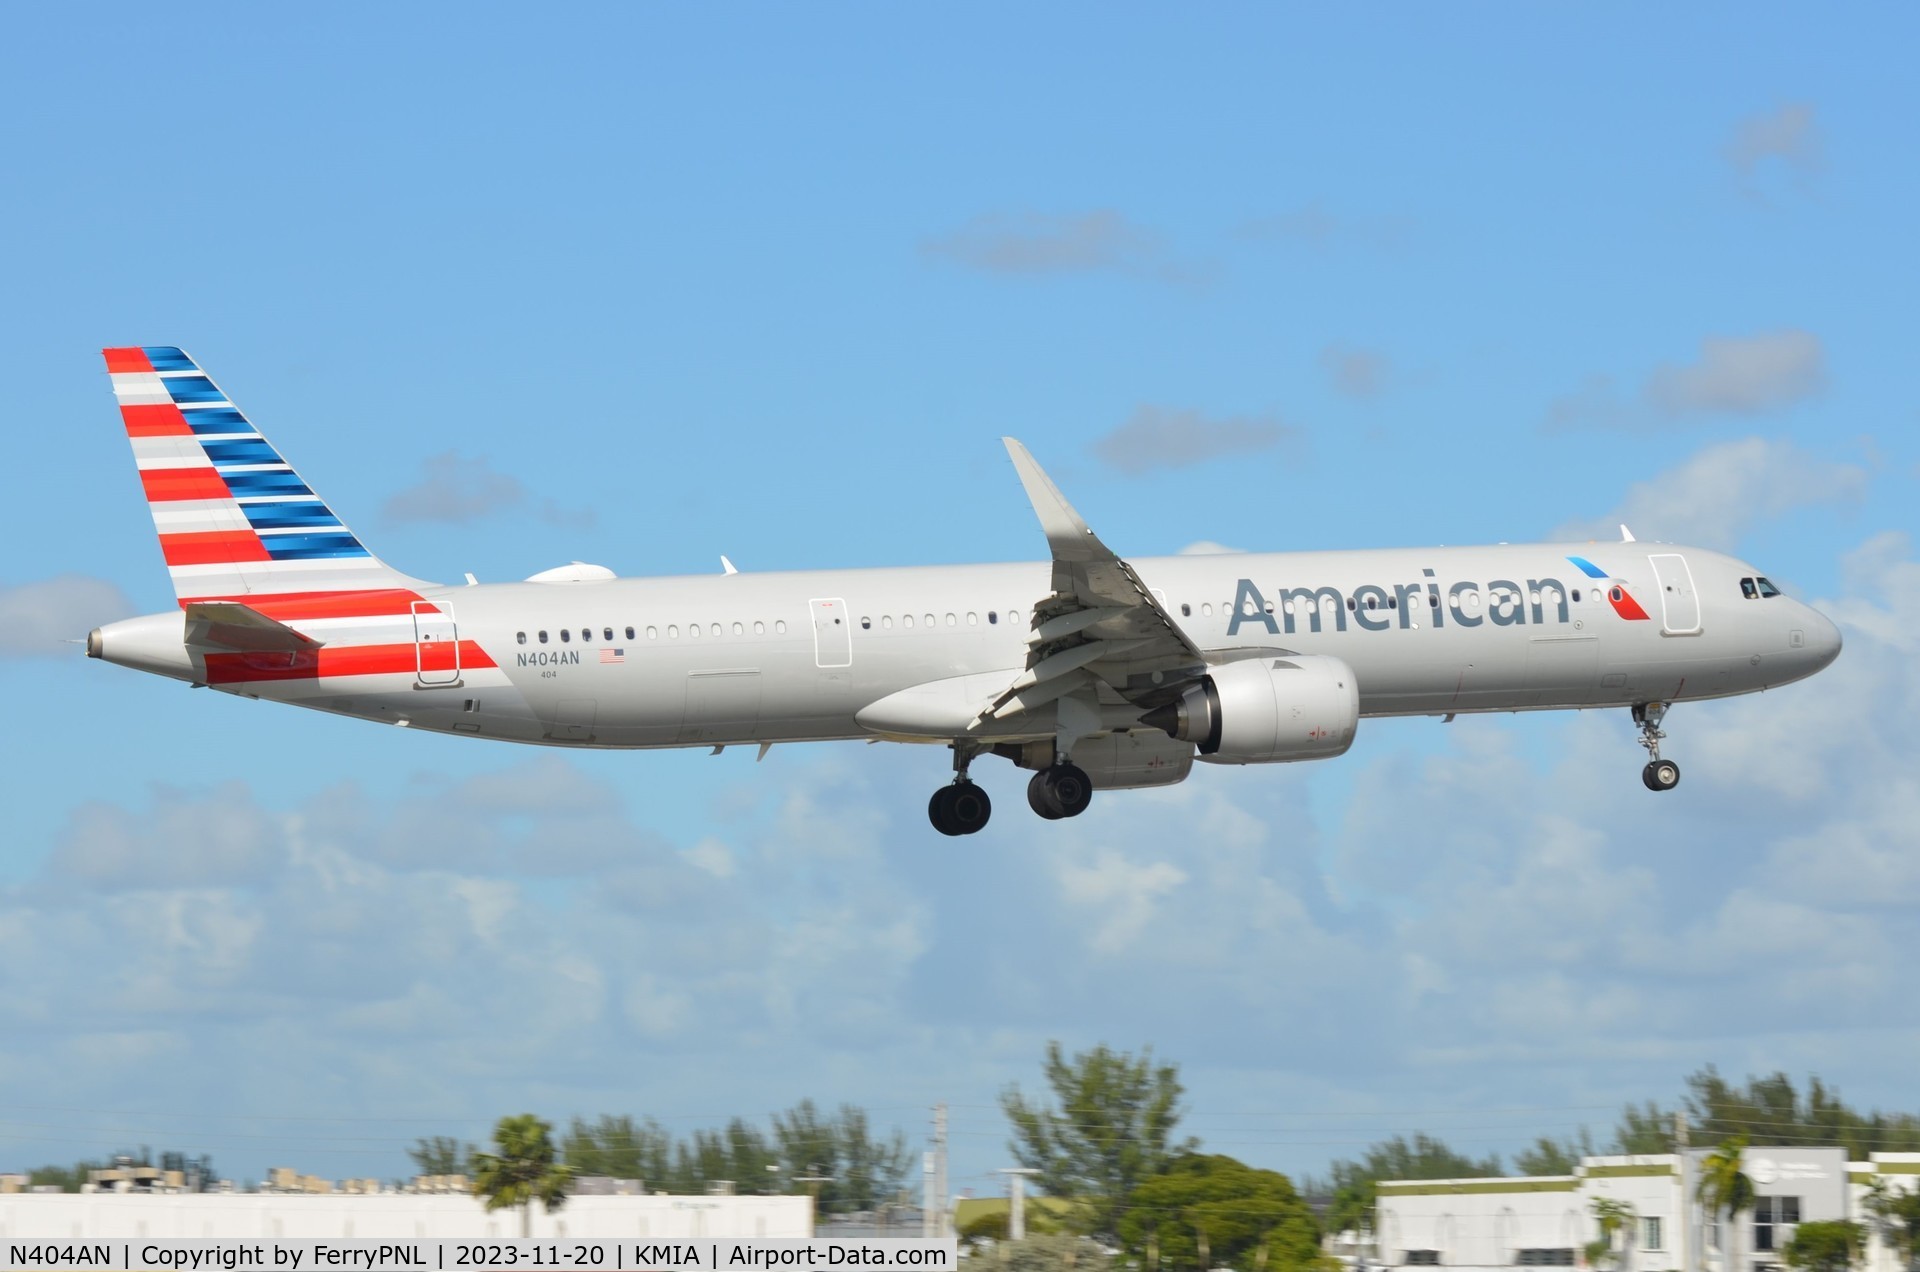 N404AN, 2019 Airbus A321-253NX C/N 8758, American A321 Neo landing on 01R